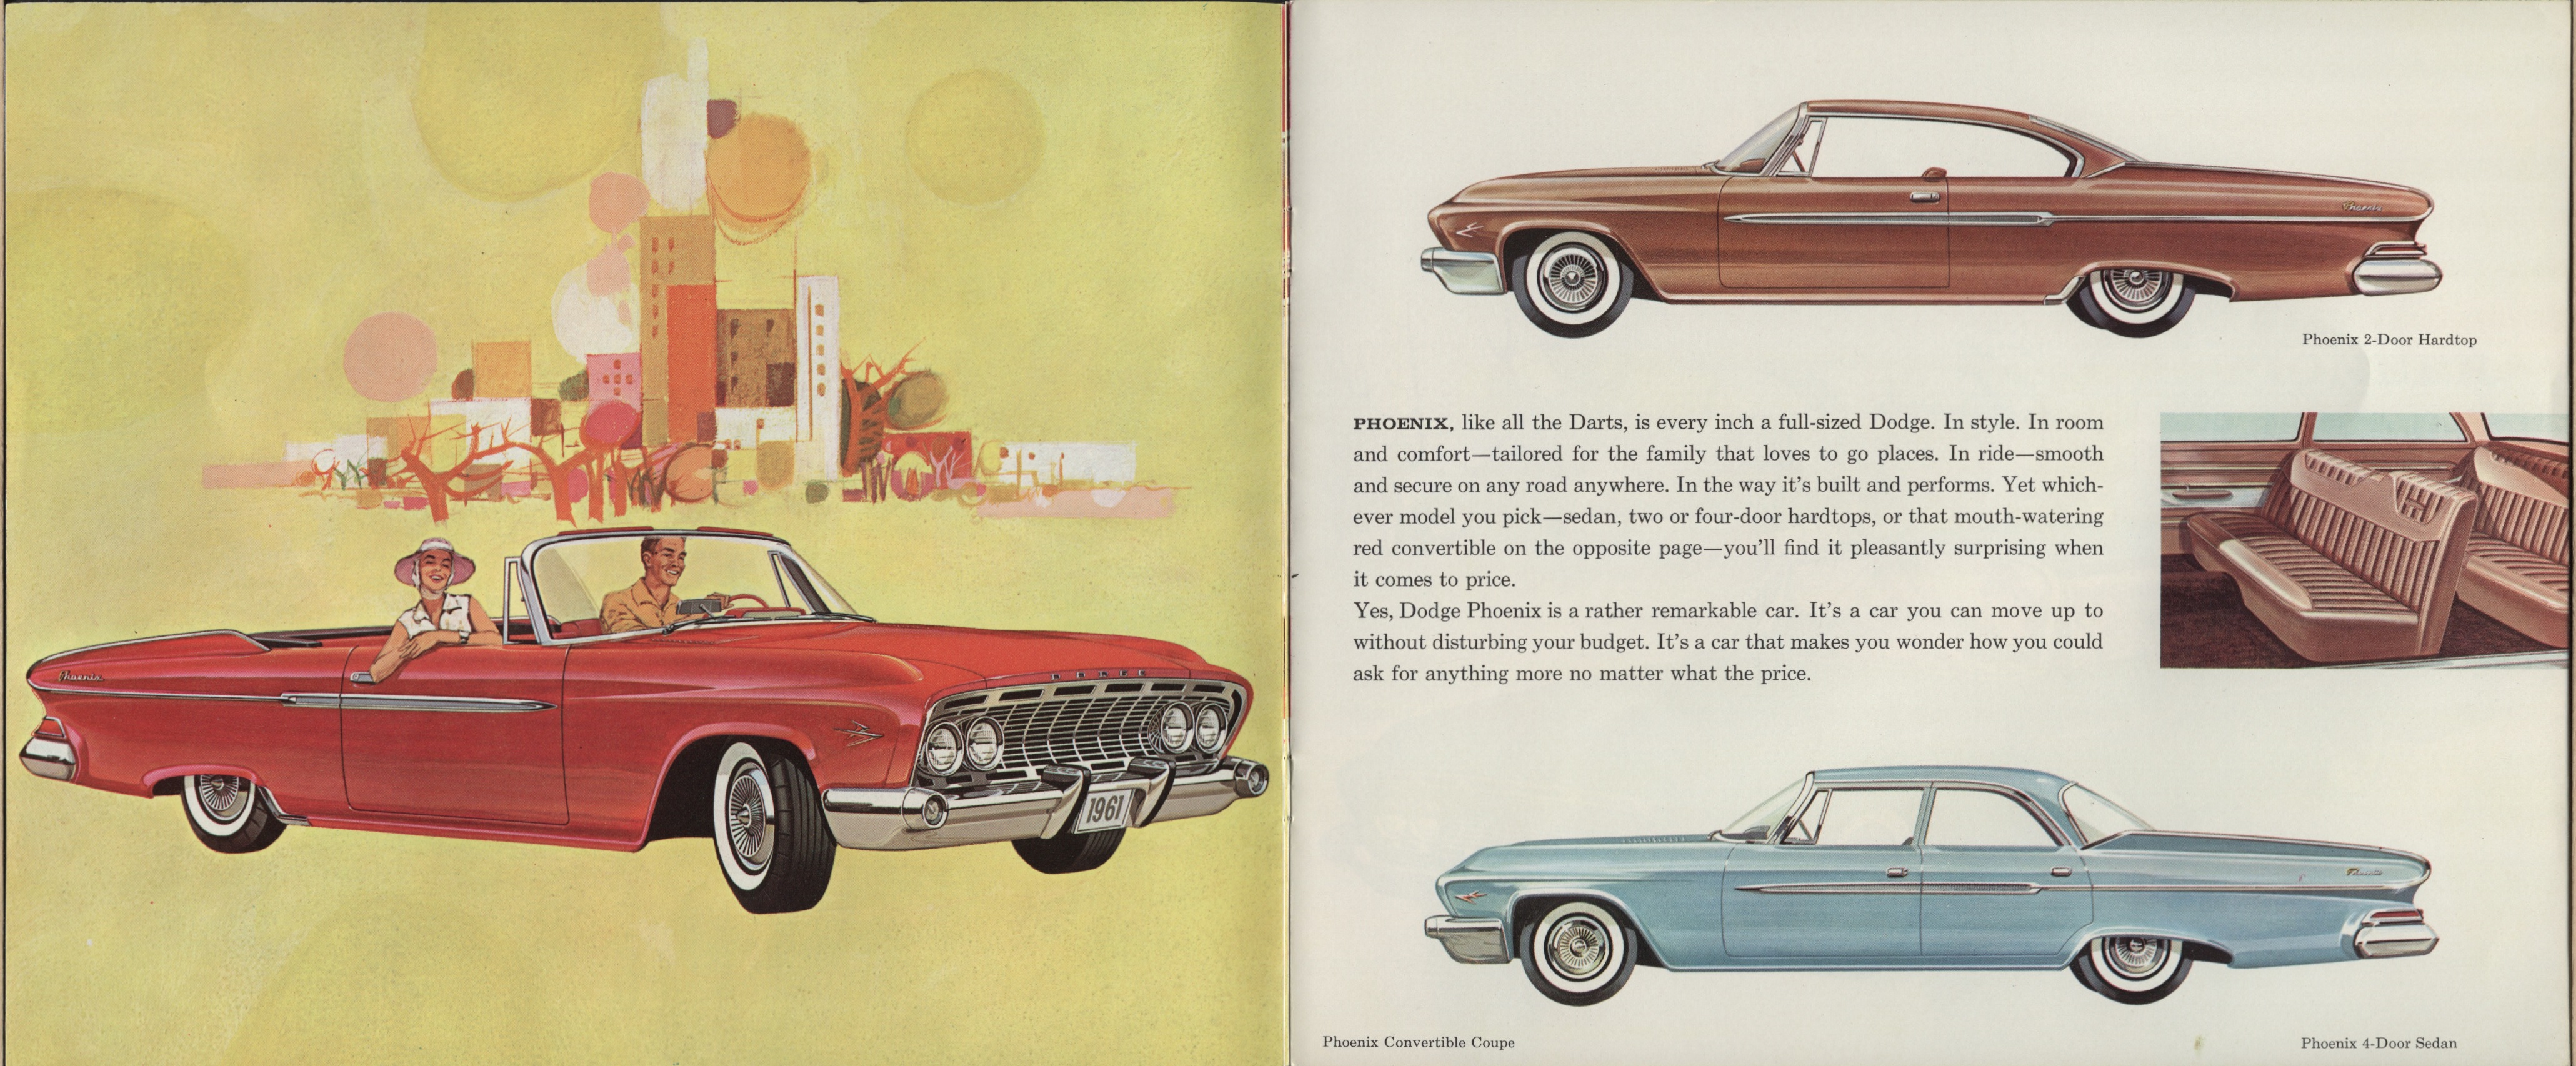 1961 Dodge Dart Brochure Canada_06-07